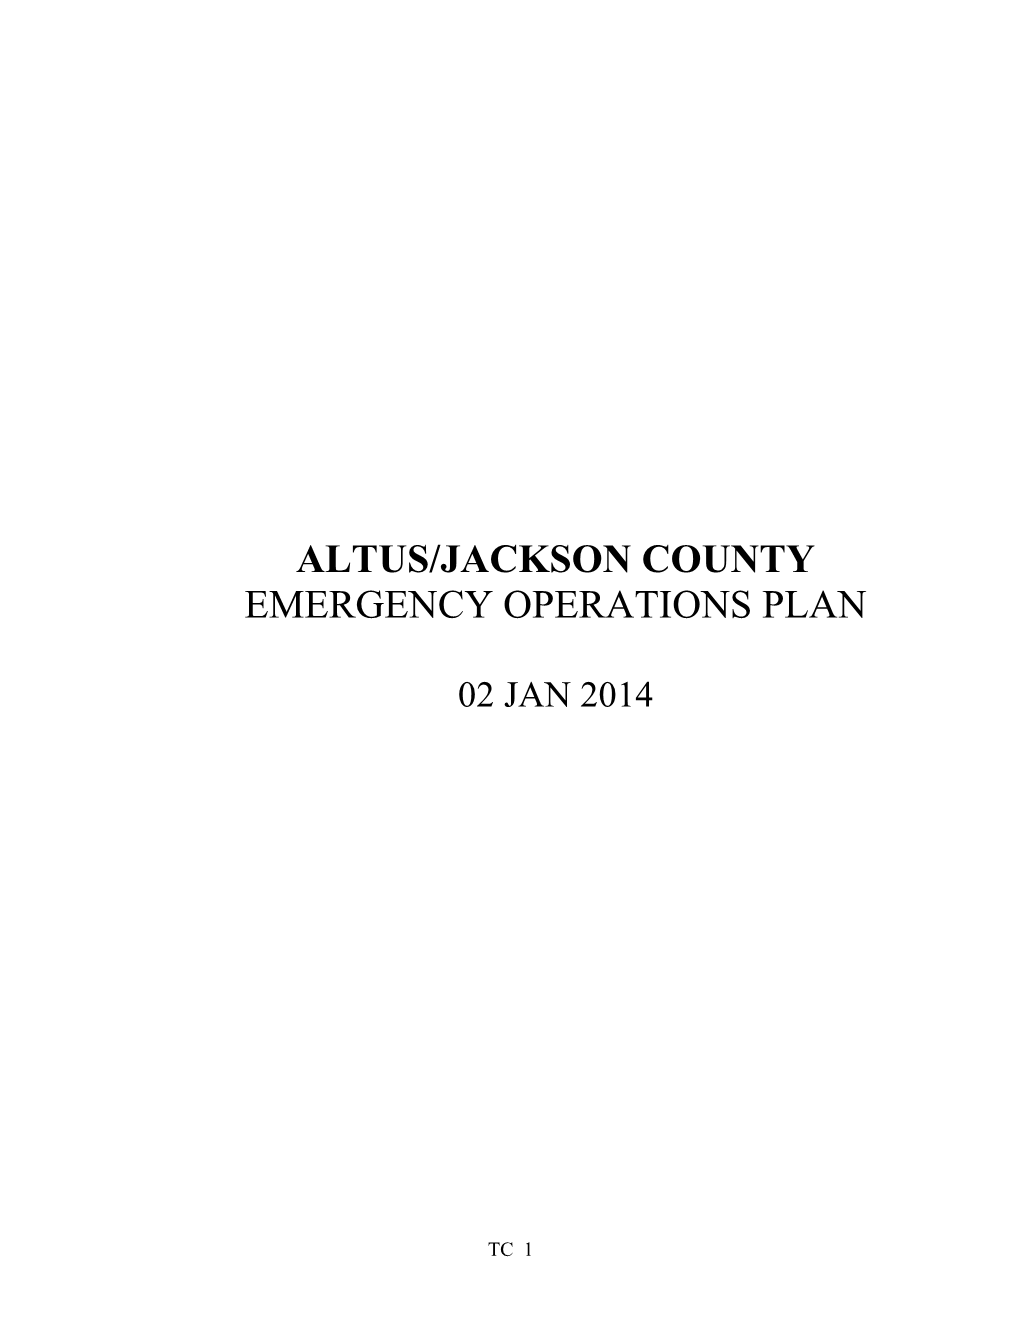 Altus/Jackson County Emergency Operations Plan